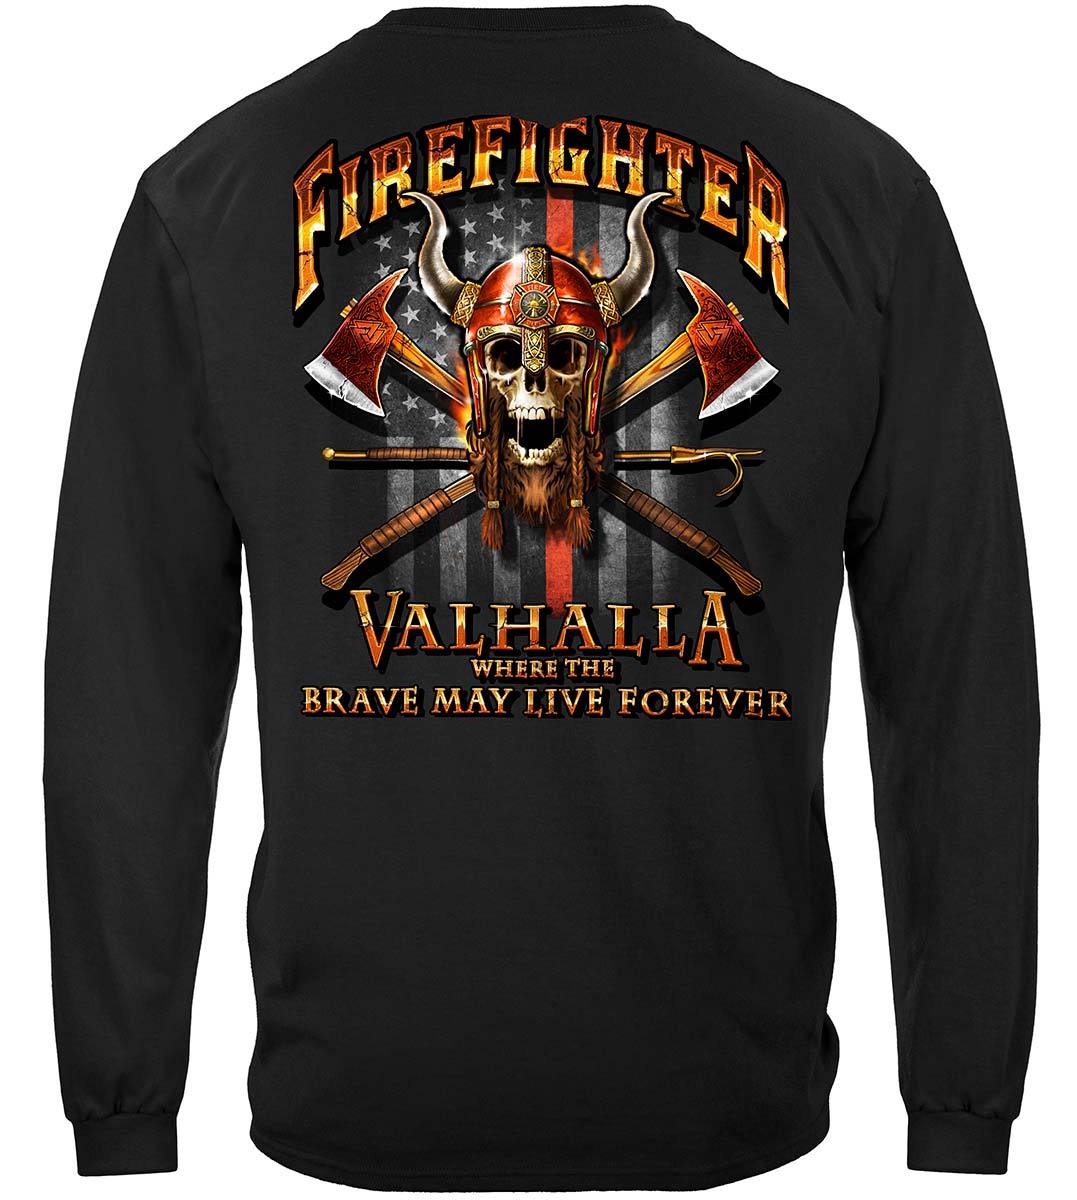 Firefighter Viking Premium T-Shirt